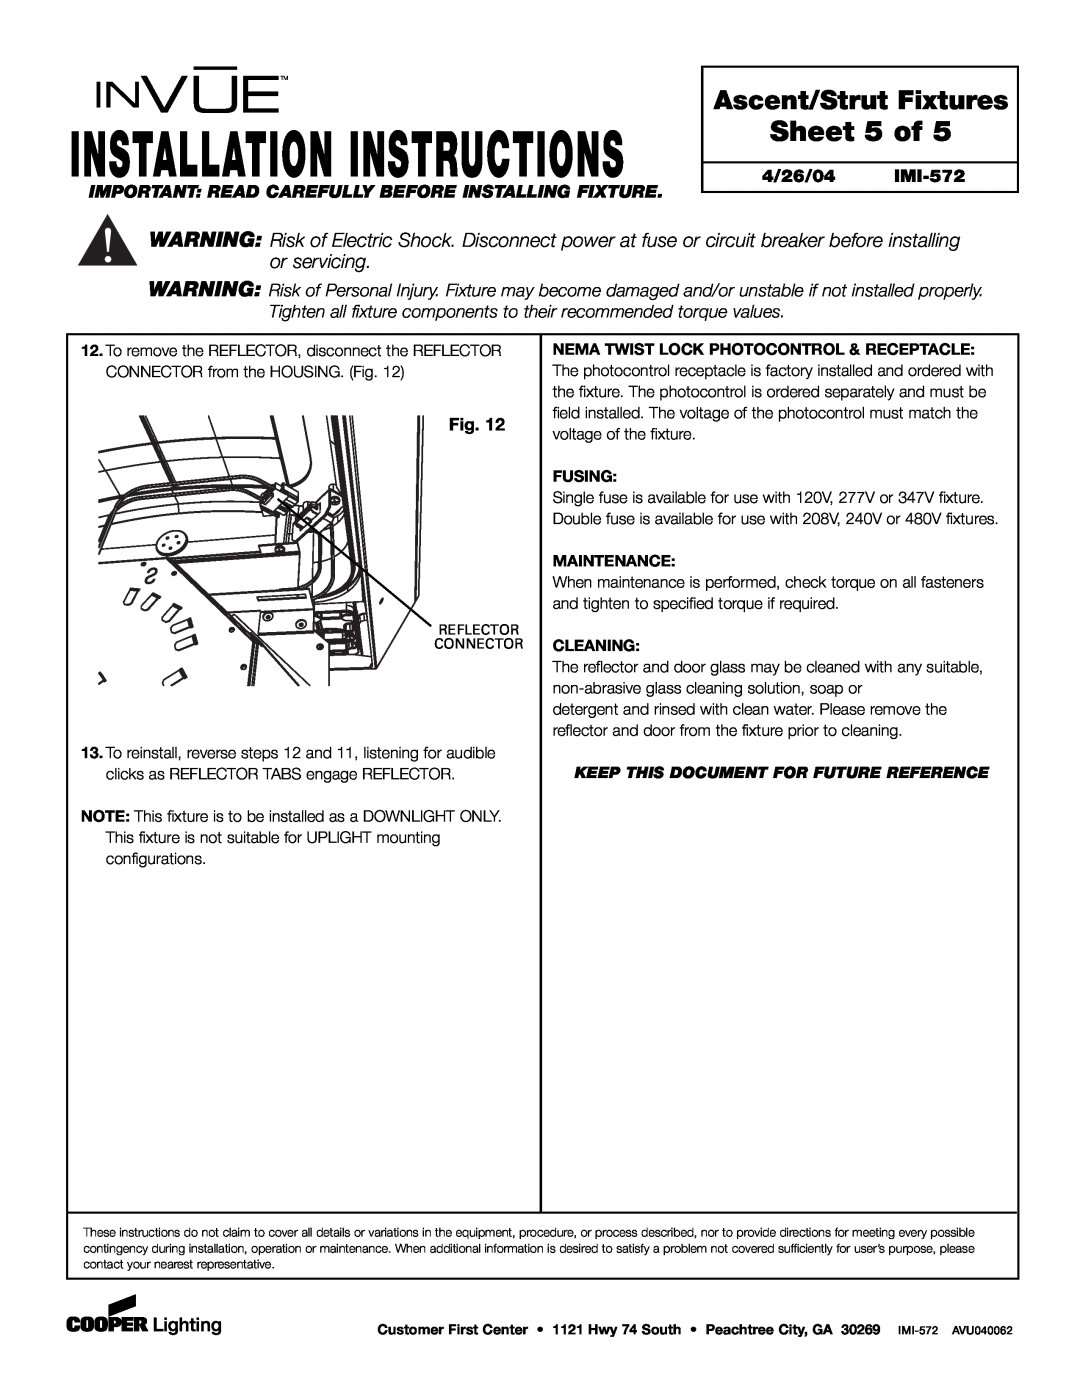 Cooper Lighting Sheet 5 of, Installation Instructions, Ascent/Strut Fixtures, 4/26/04 IMI-572, Fusing, Maintenance 